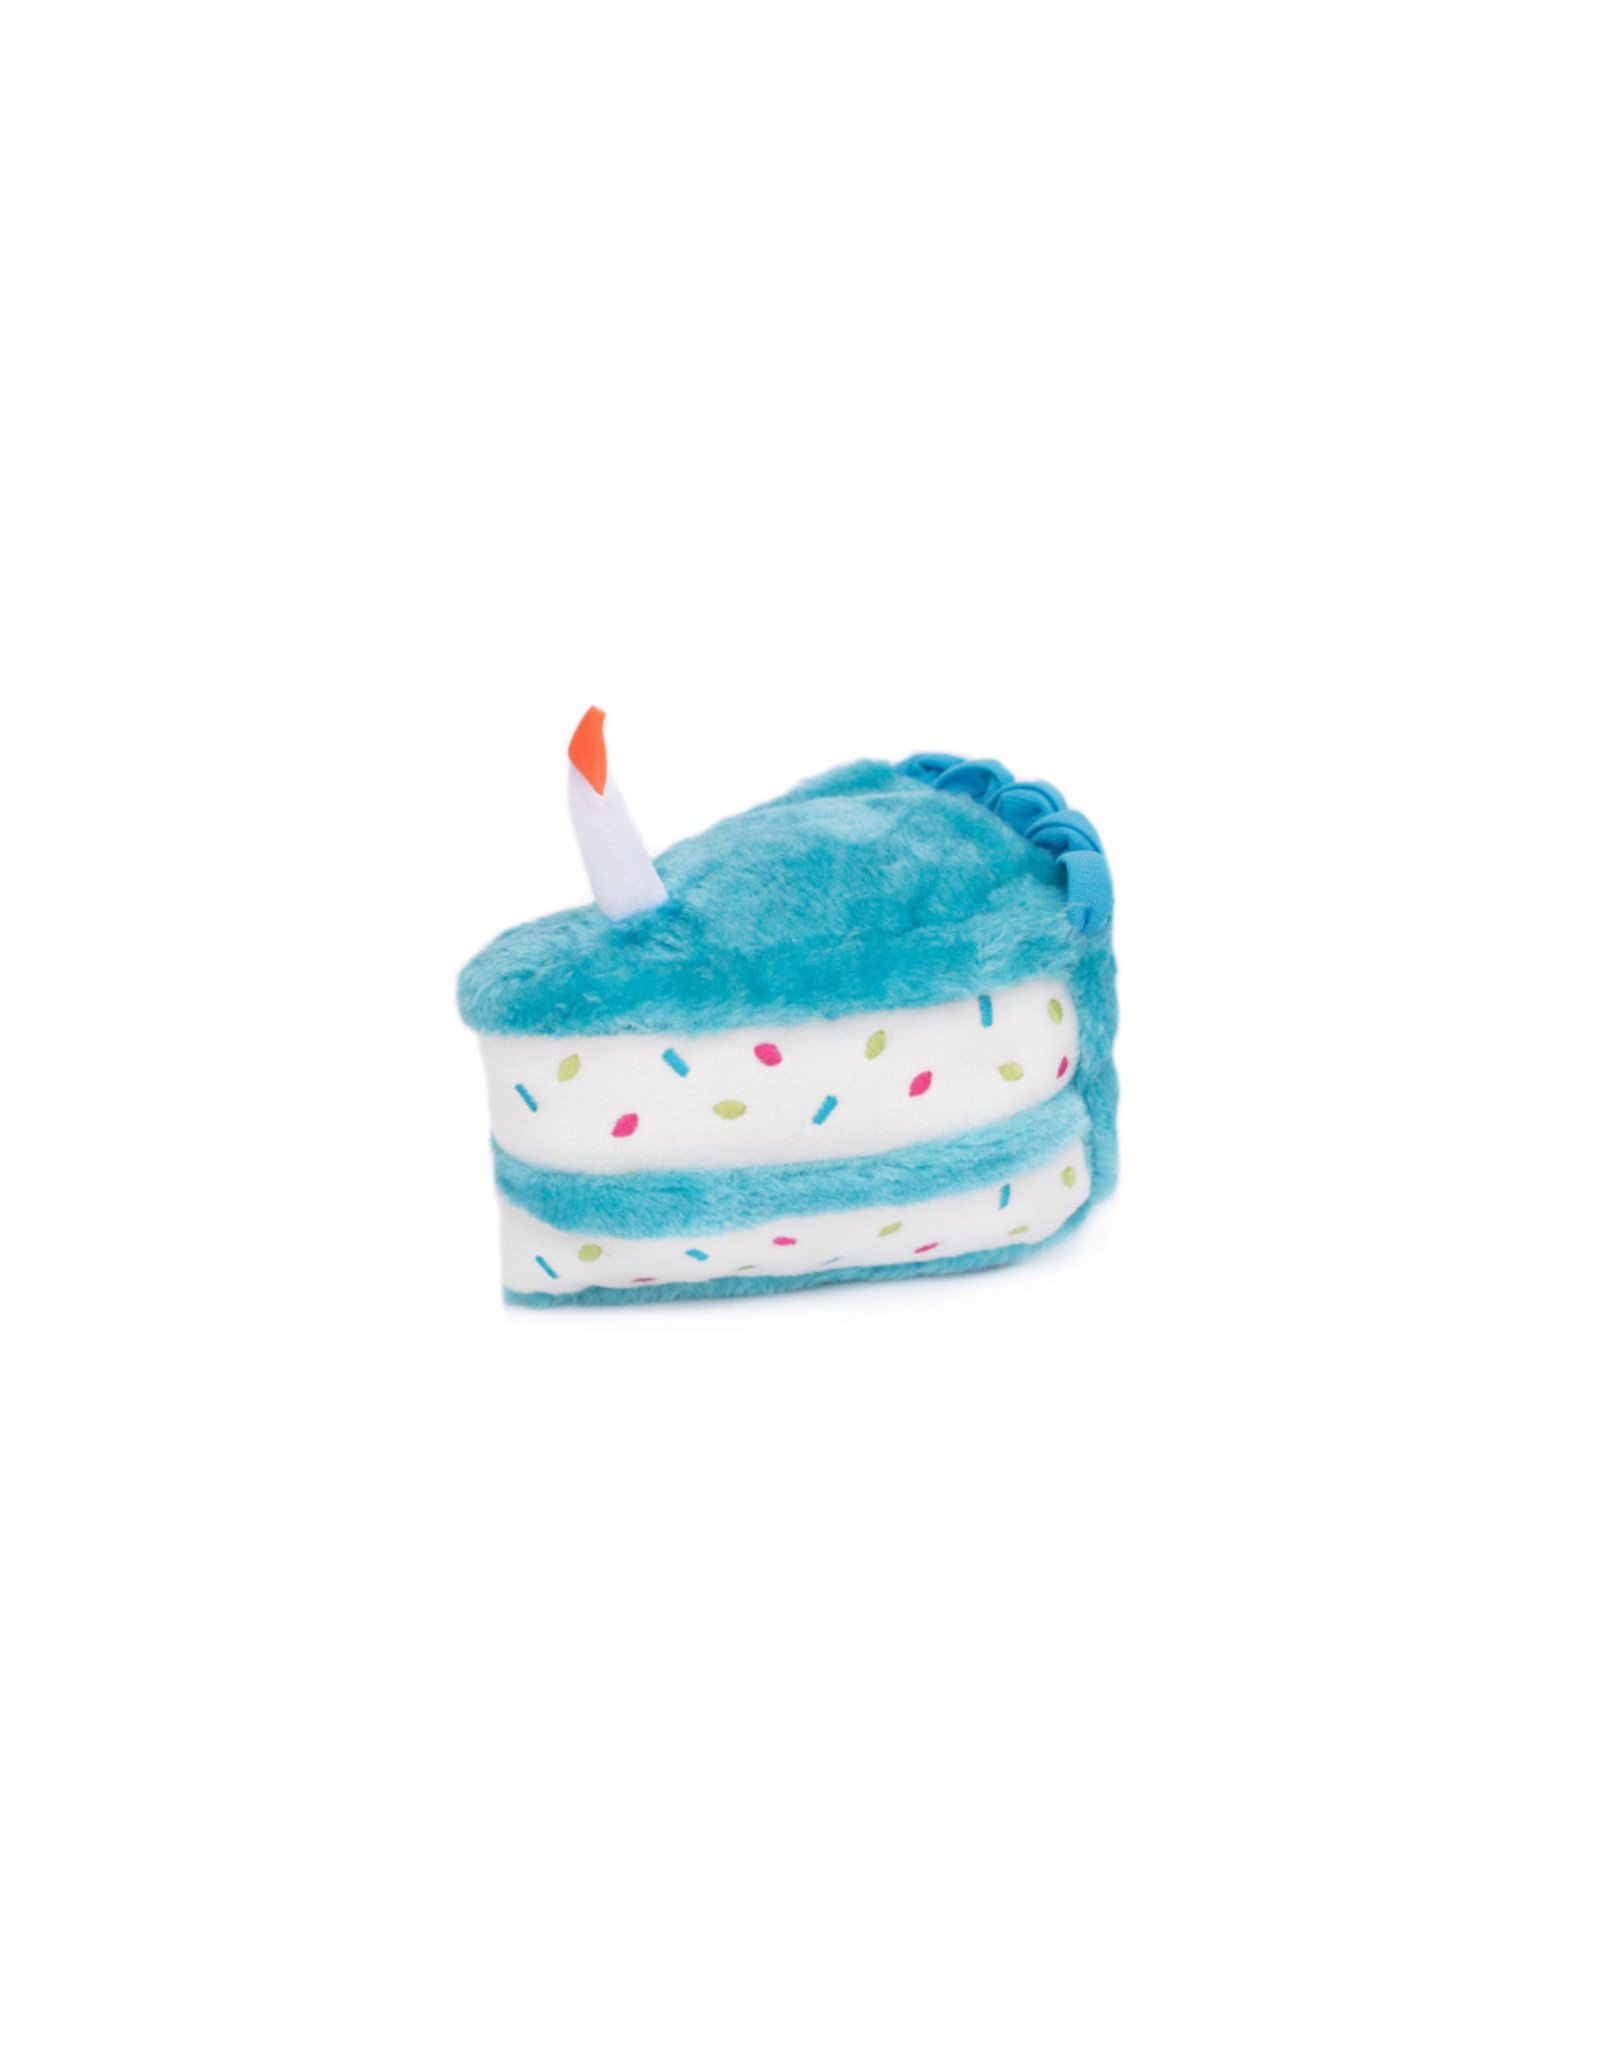 Zippy Paws Zippy Paws Birthday Cake Blue